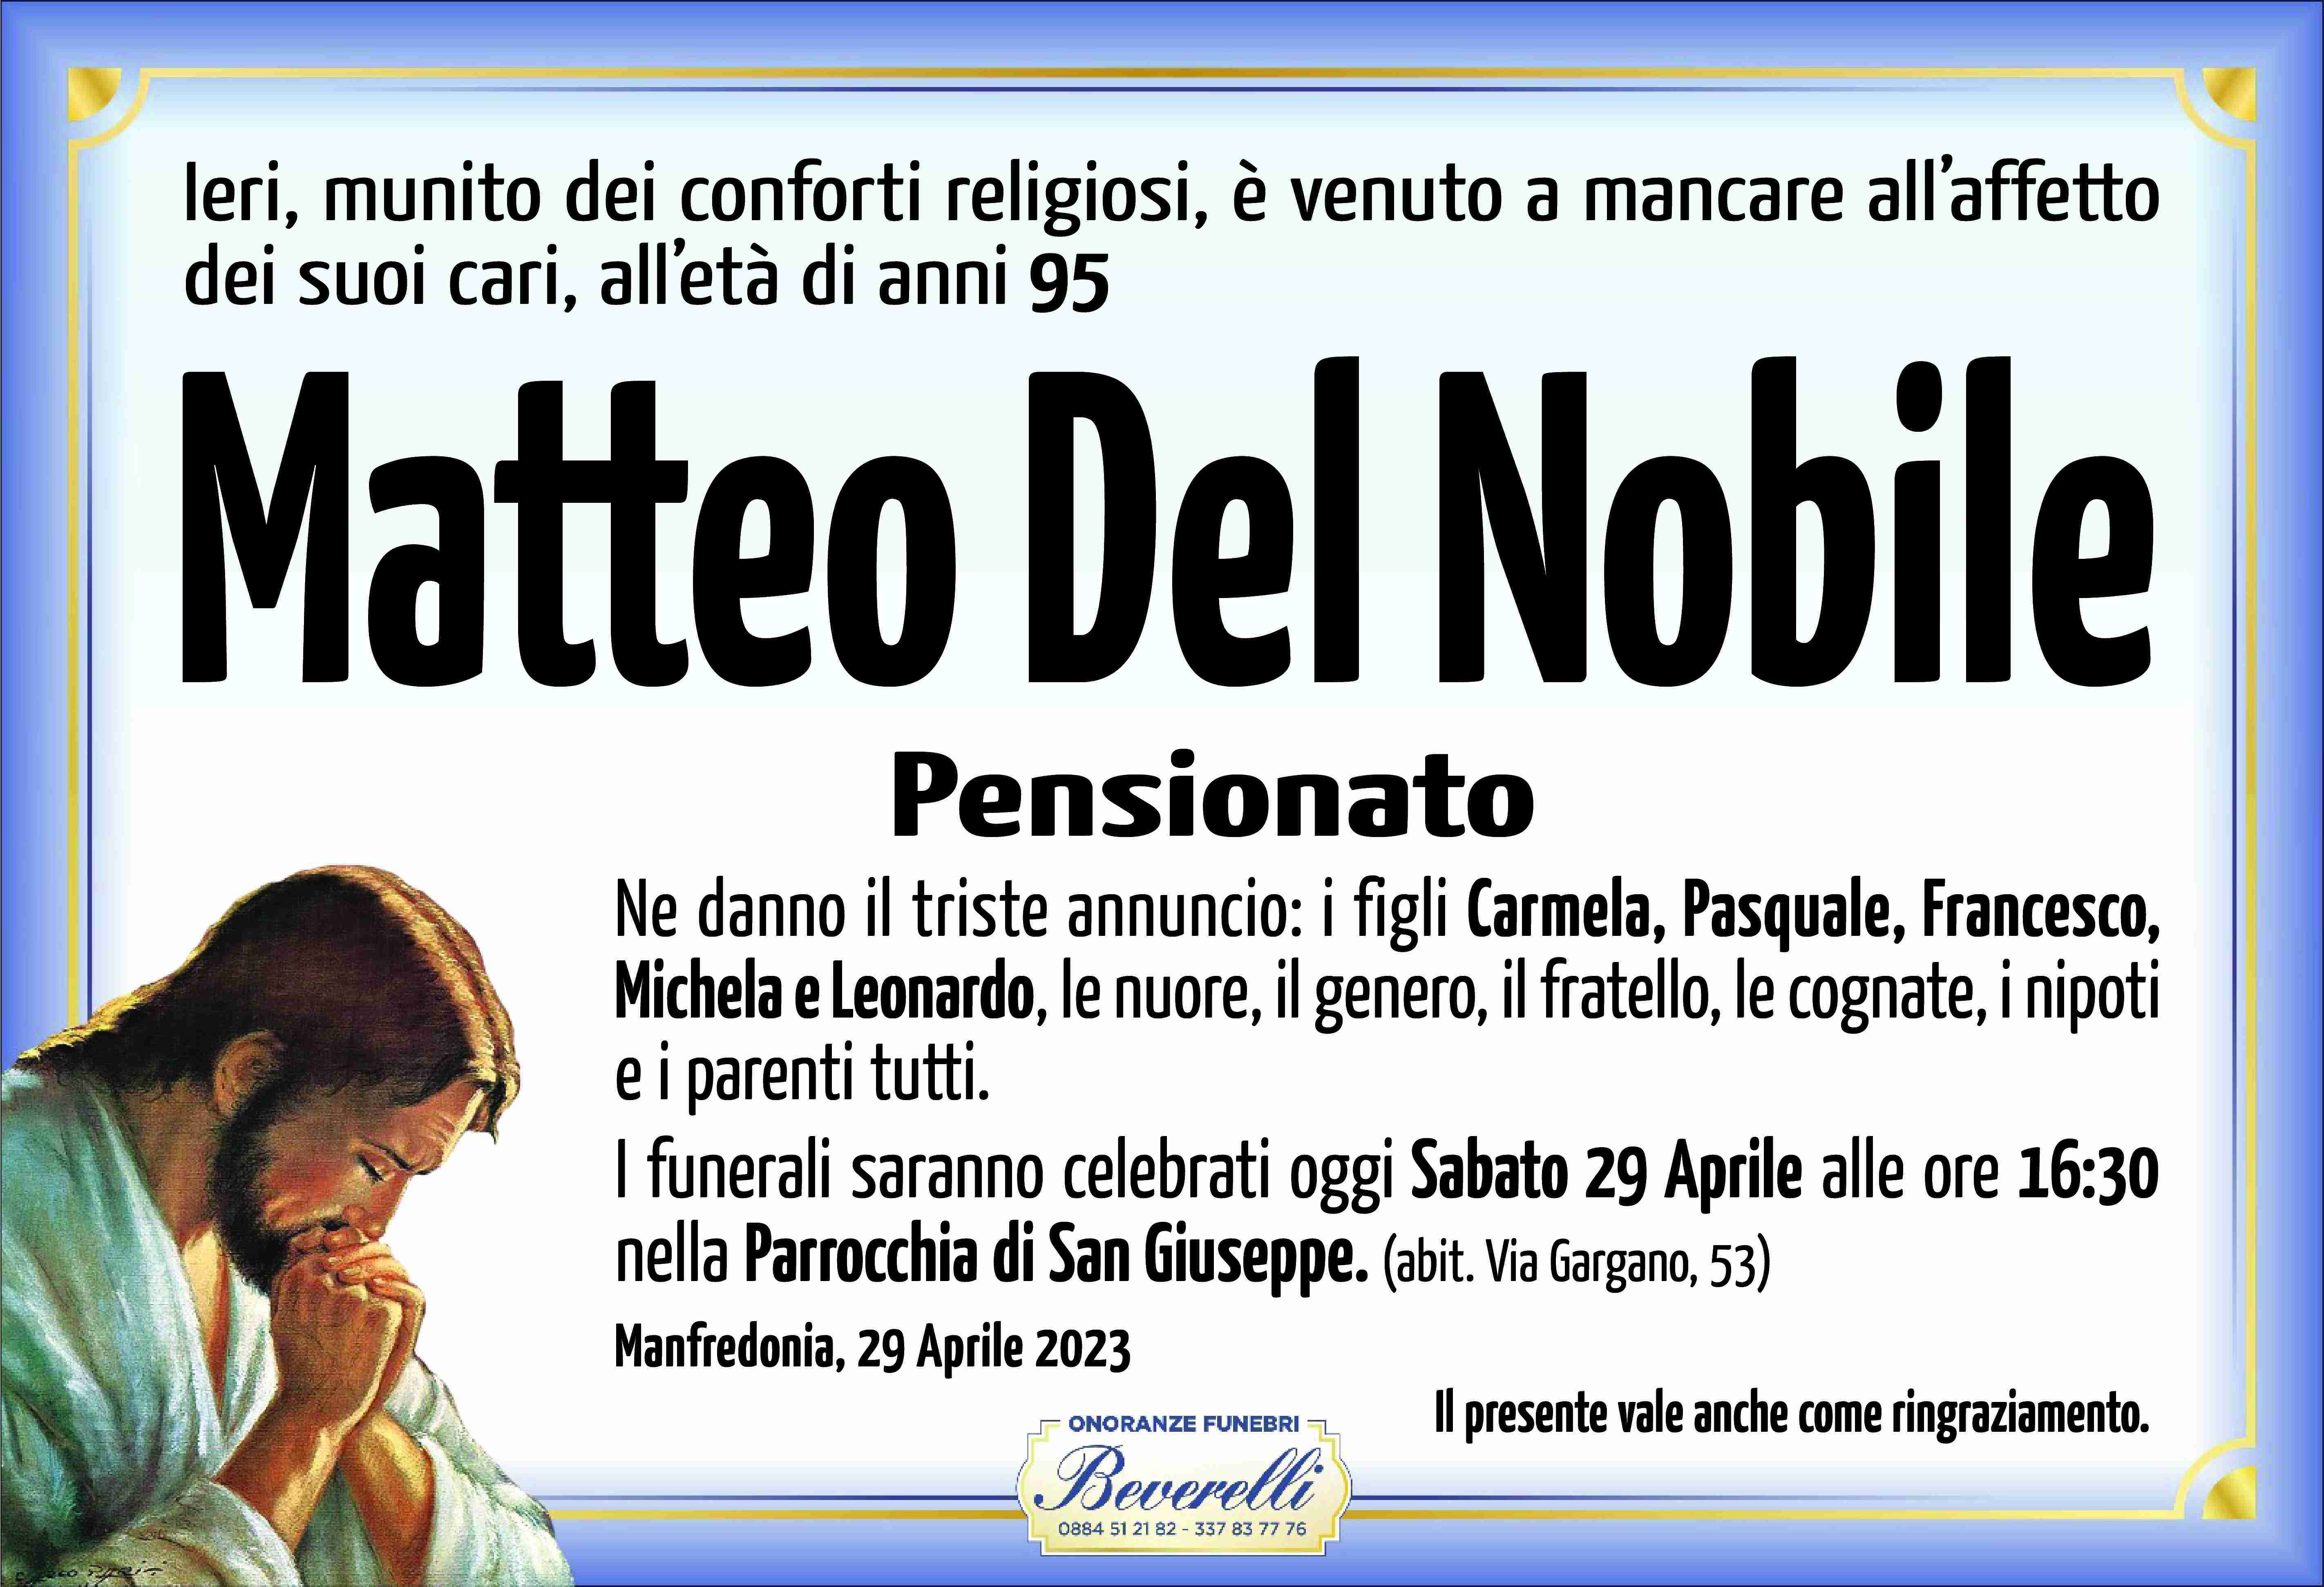 Matteo Del Nobile